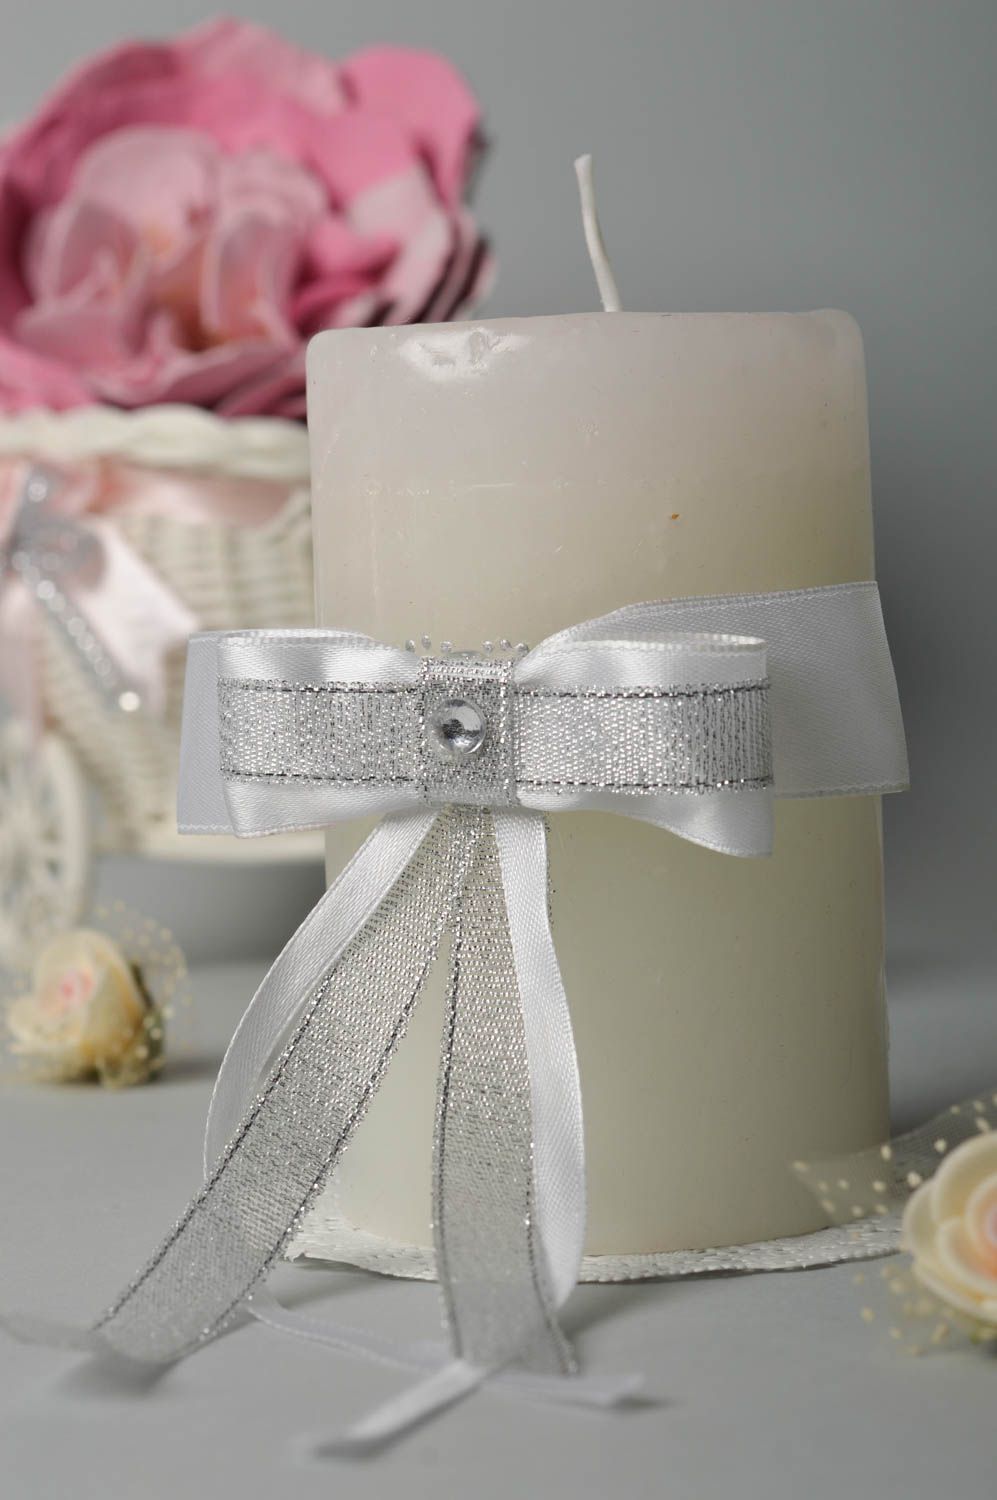 Handmade candle made of paraffin wedding accessories wedding decor ideas photo 1